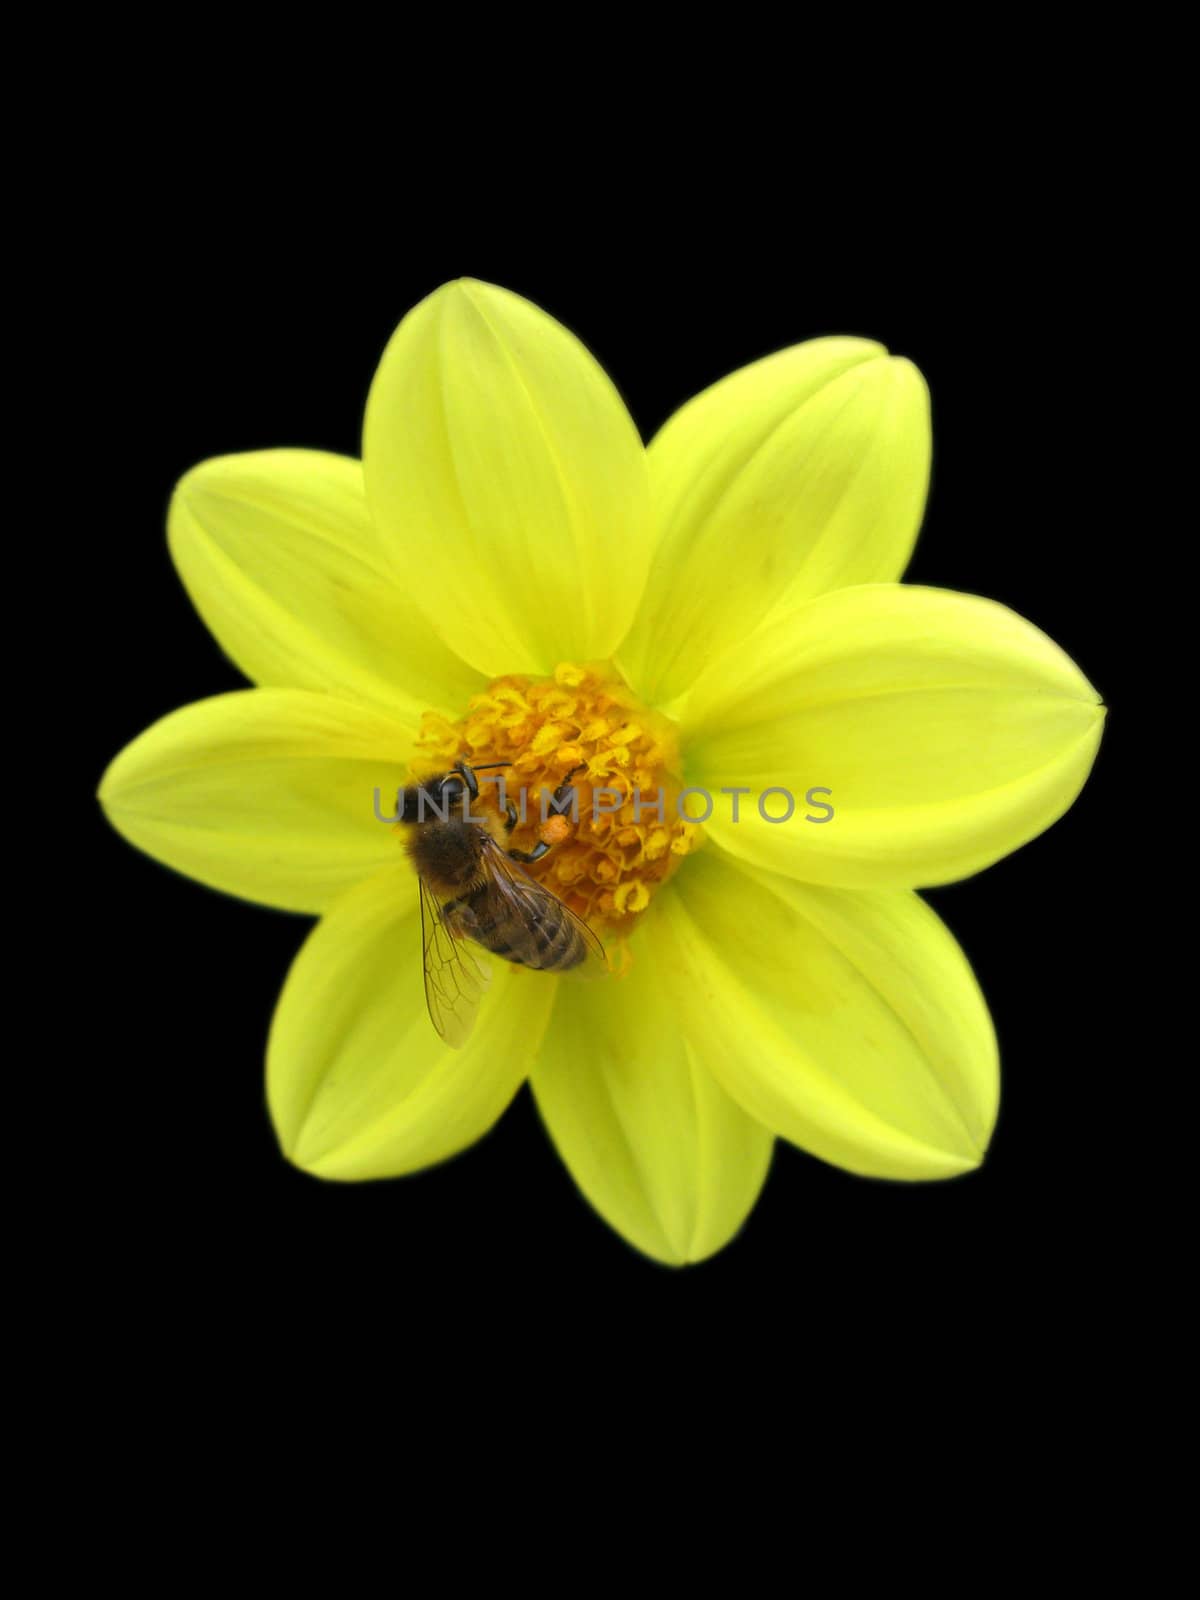 bee on yellow flower over black